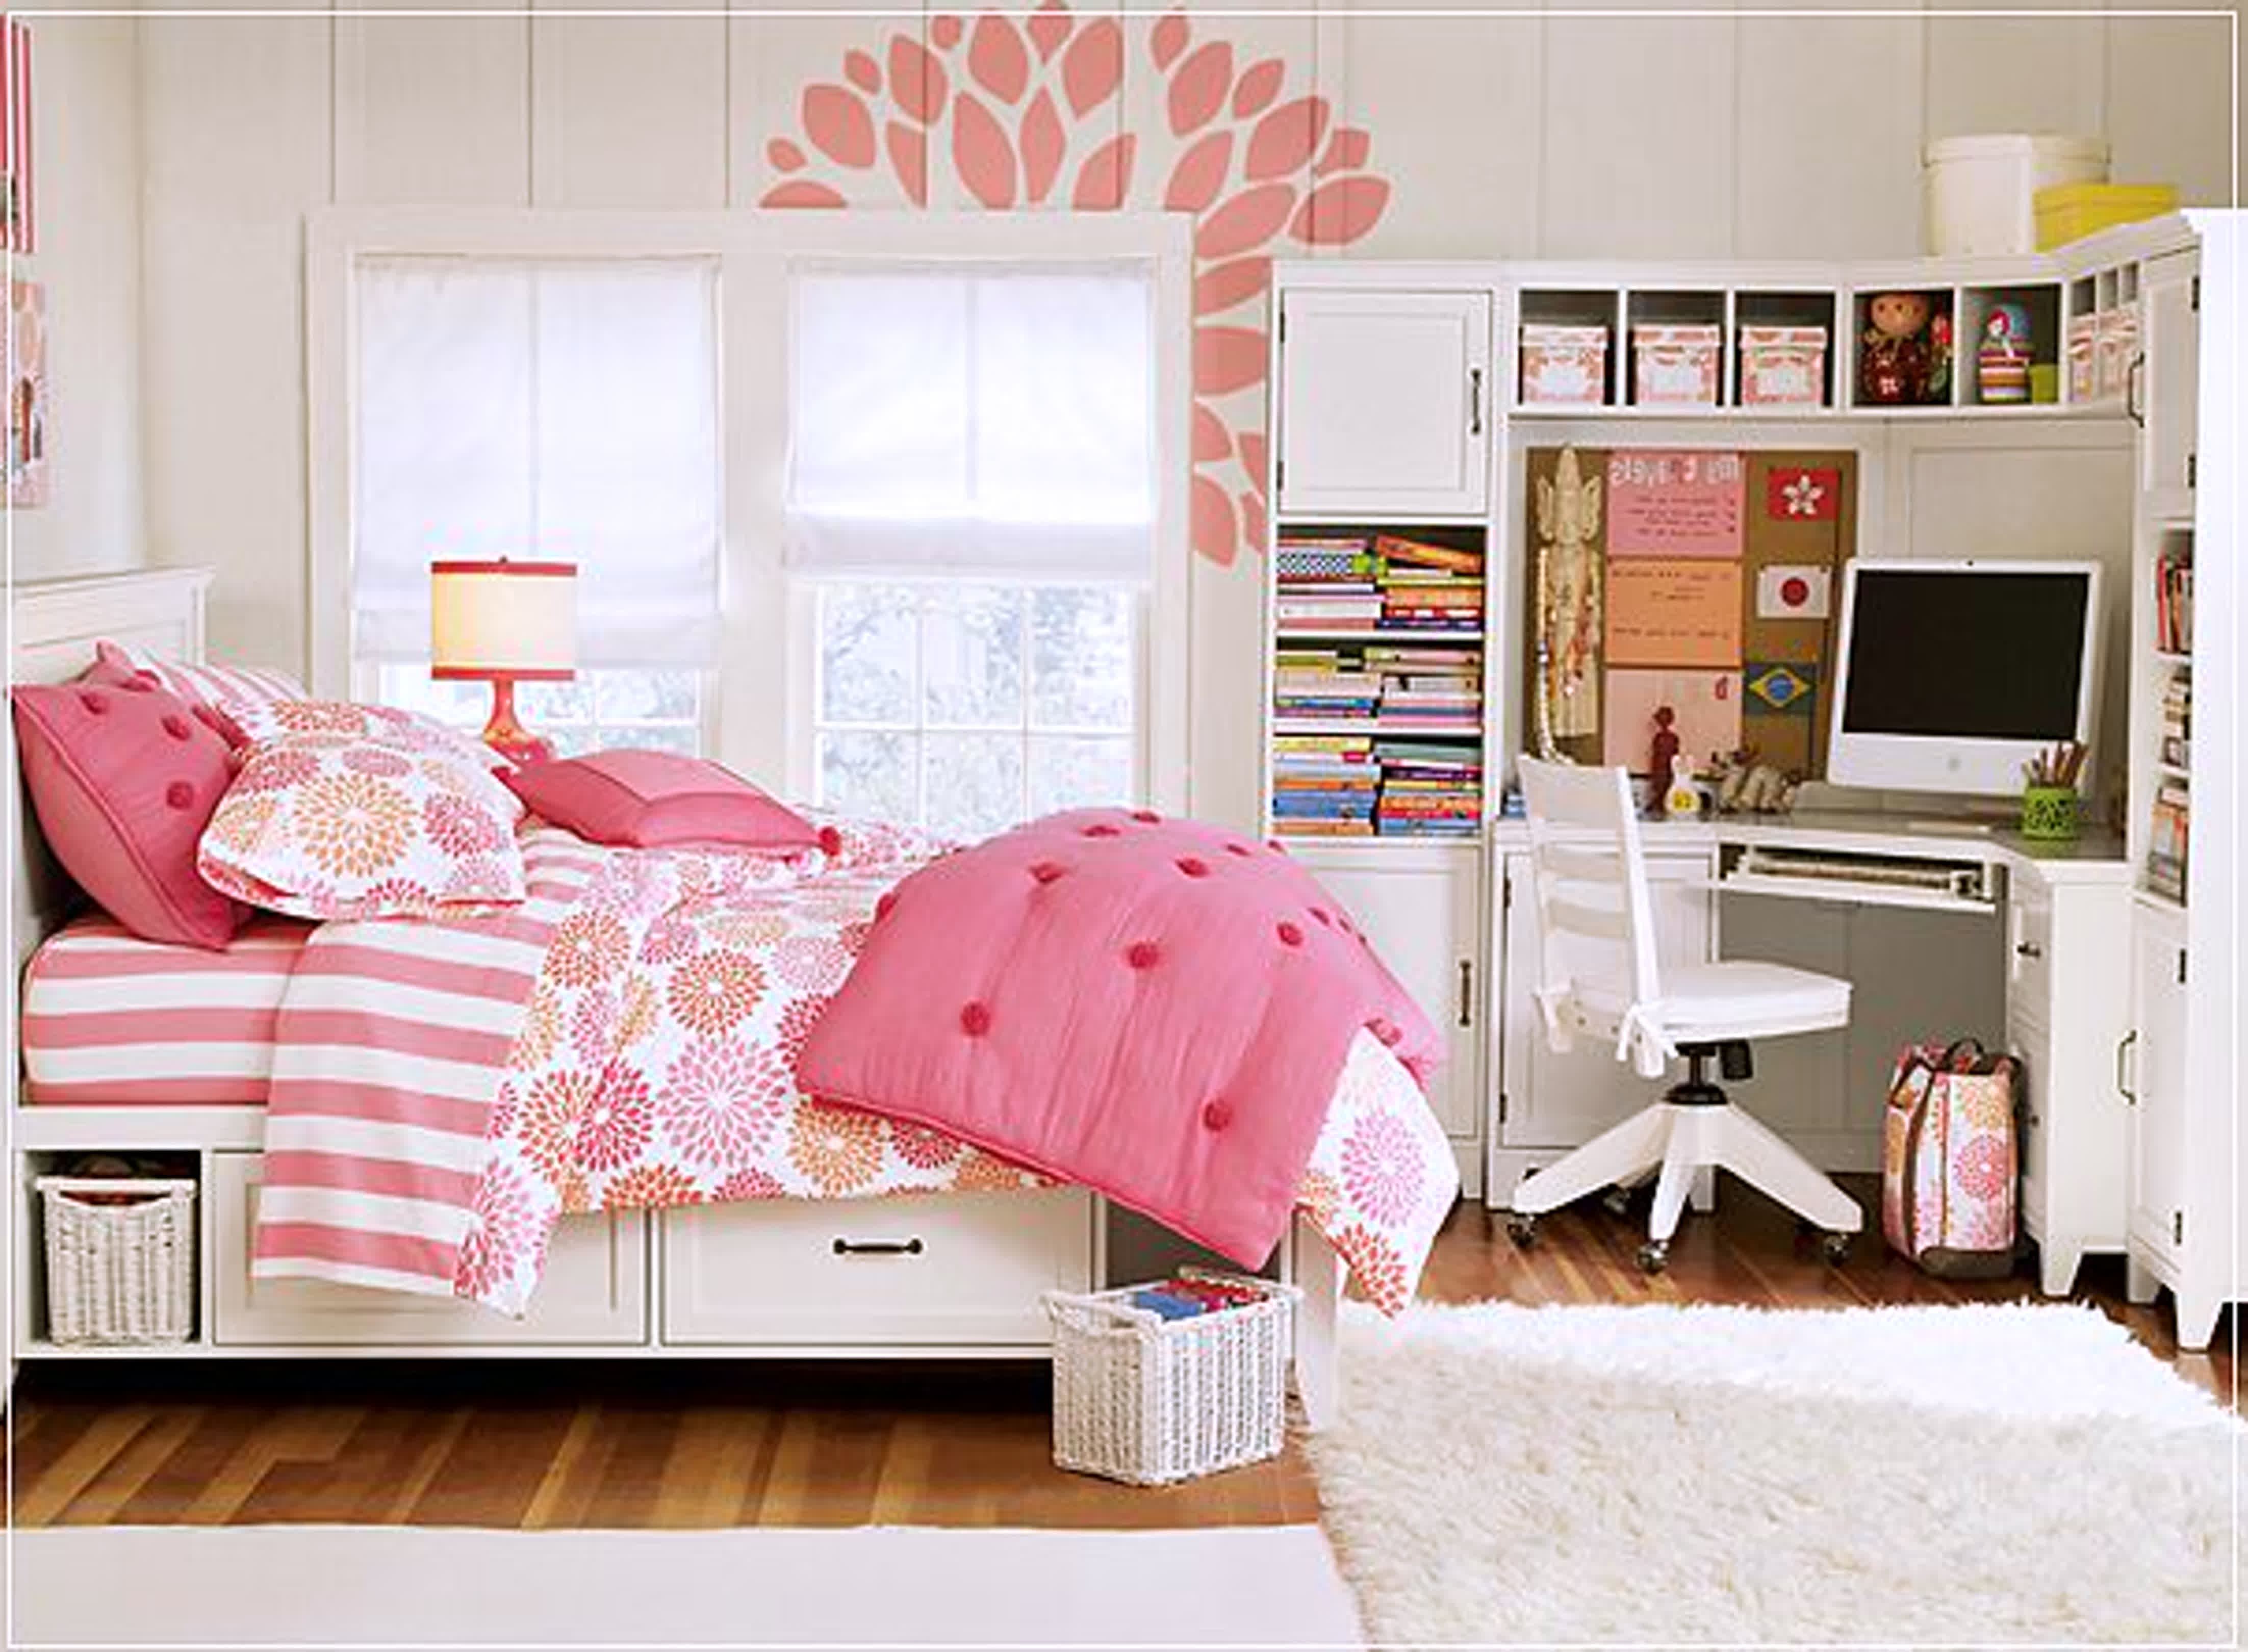 Teen Girl Bedroom Design with Black Furniture, Black And White Teen Bedroom Bedroom In 2019